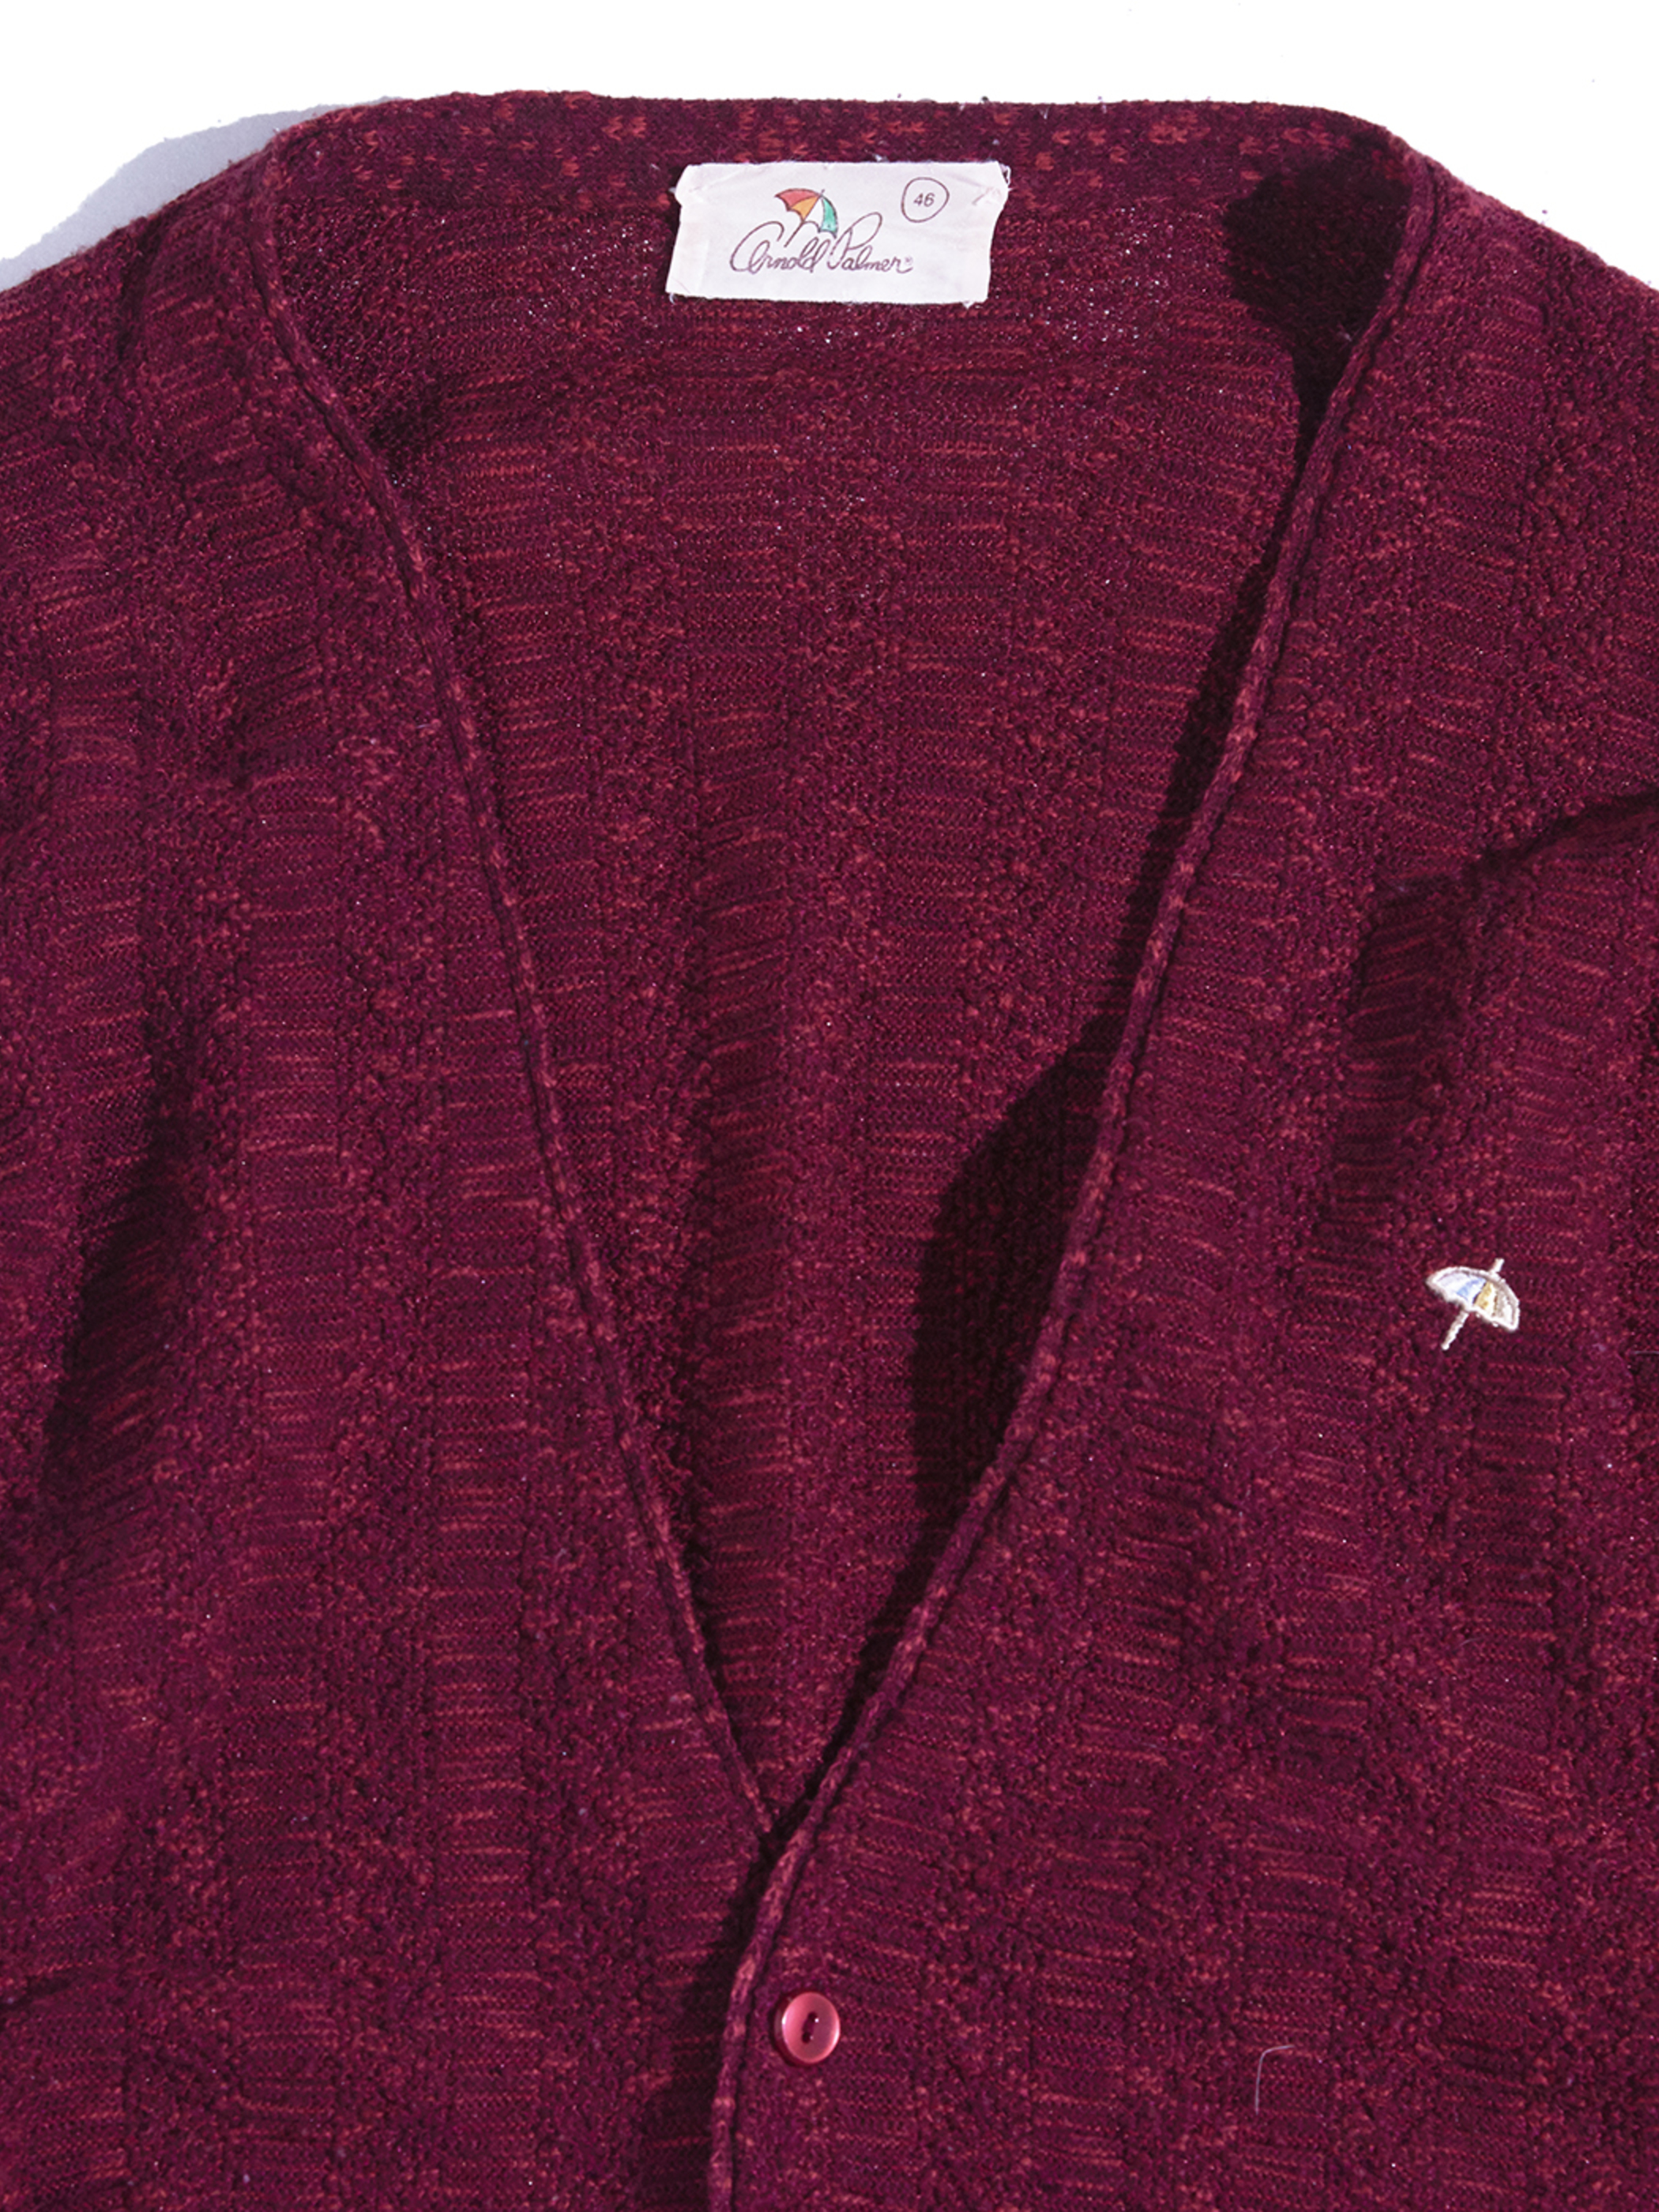 1970s "Alnord Palmer" acrylic knit cardigan -BURGANDY-